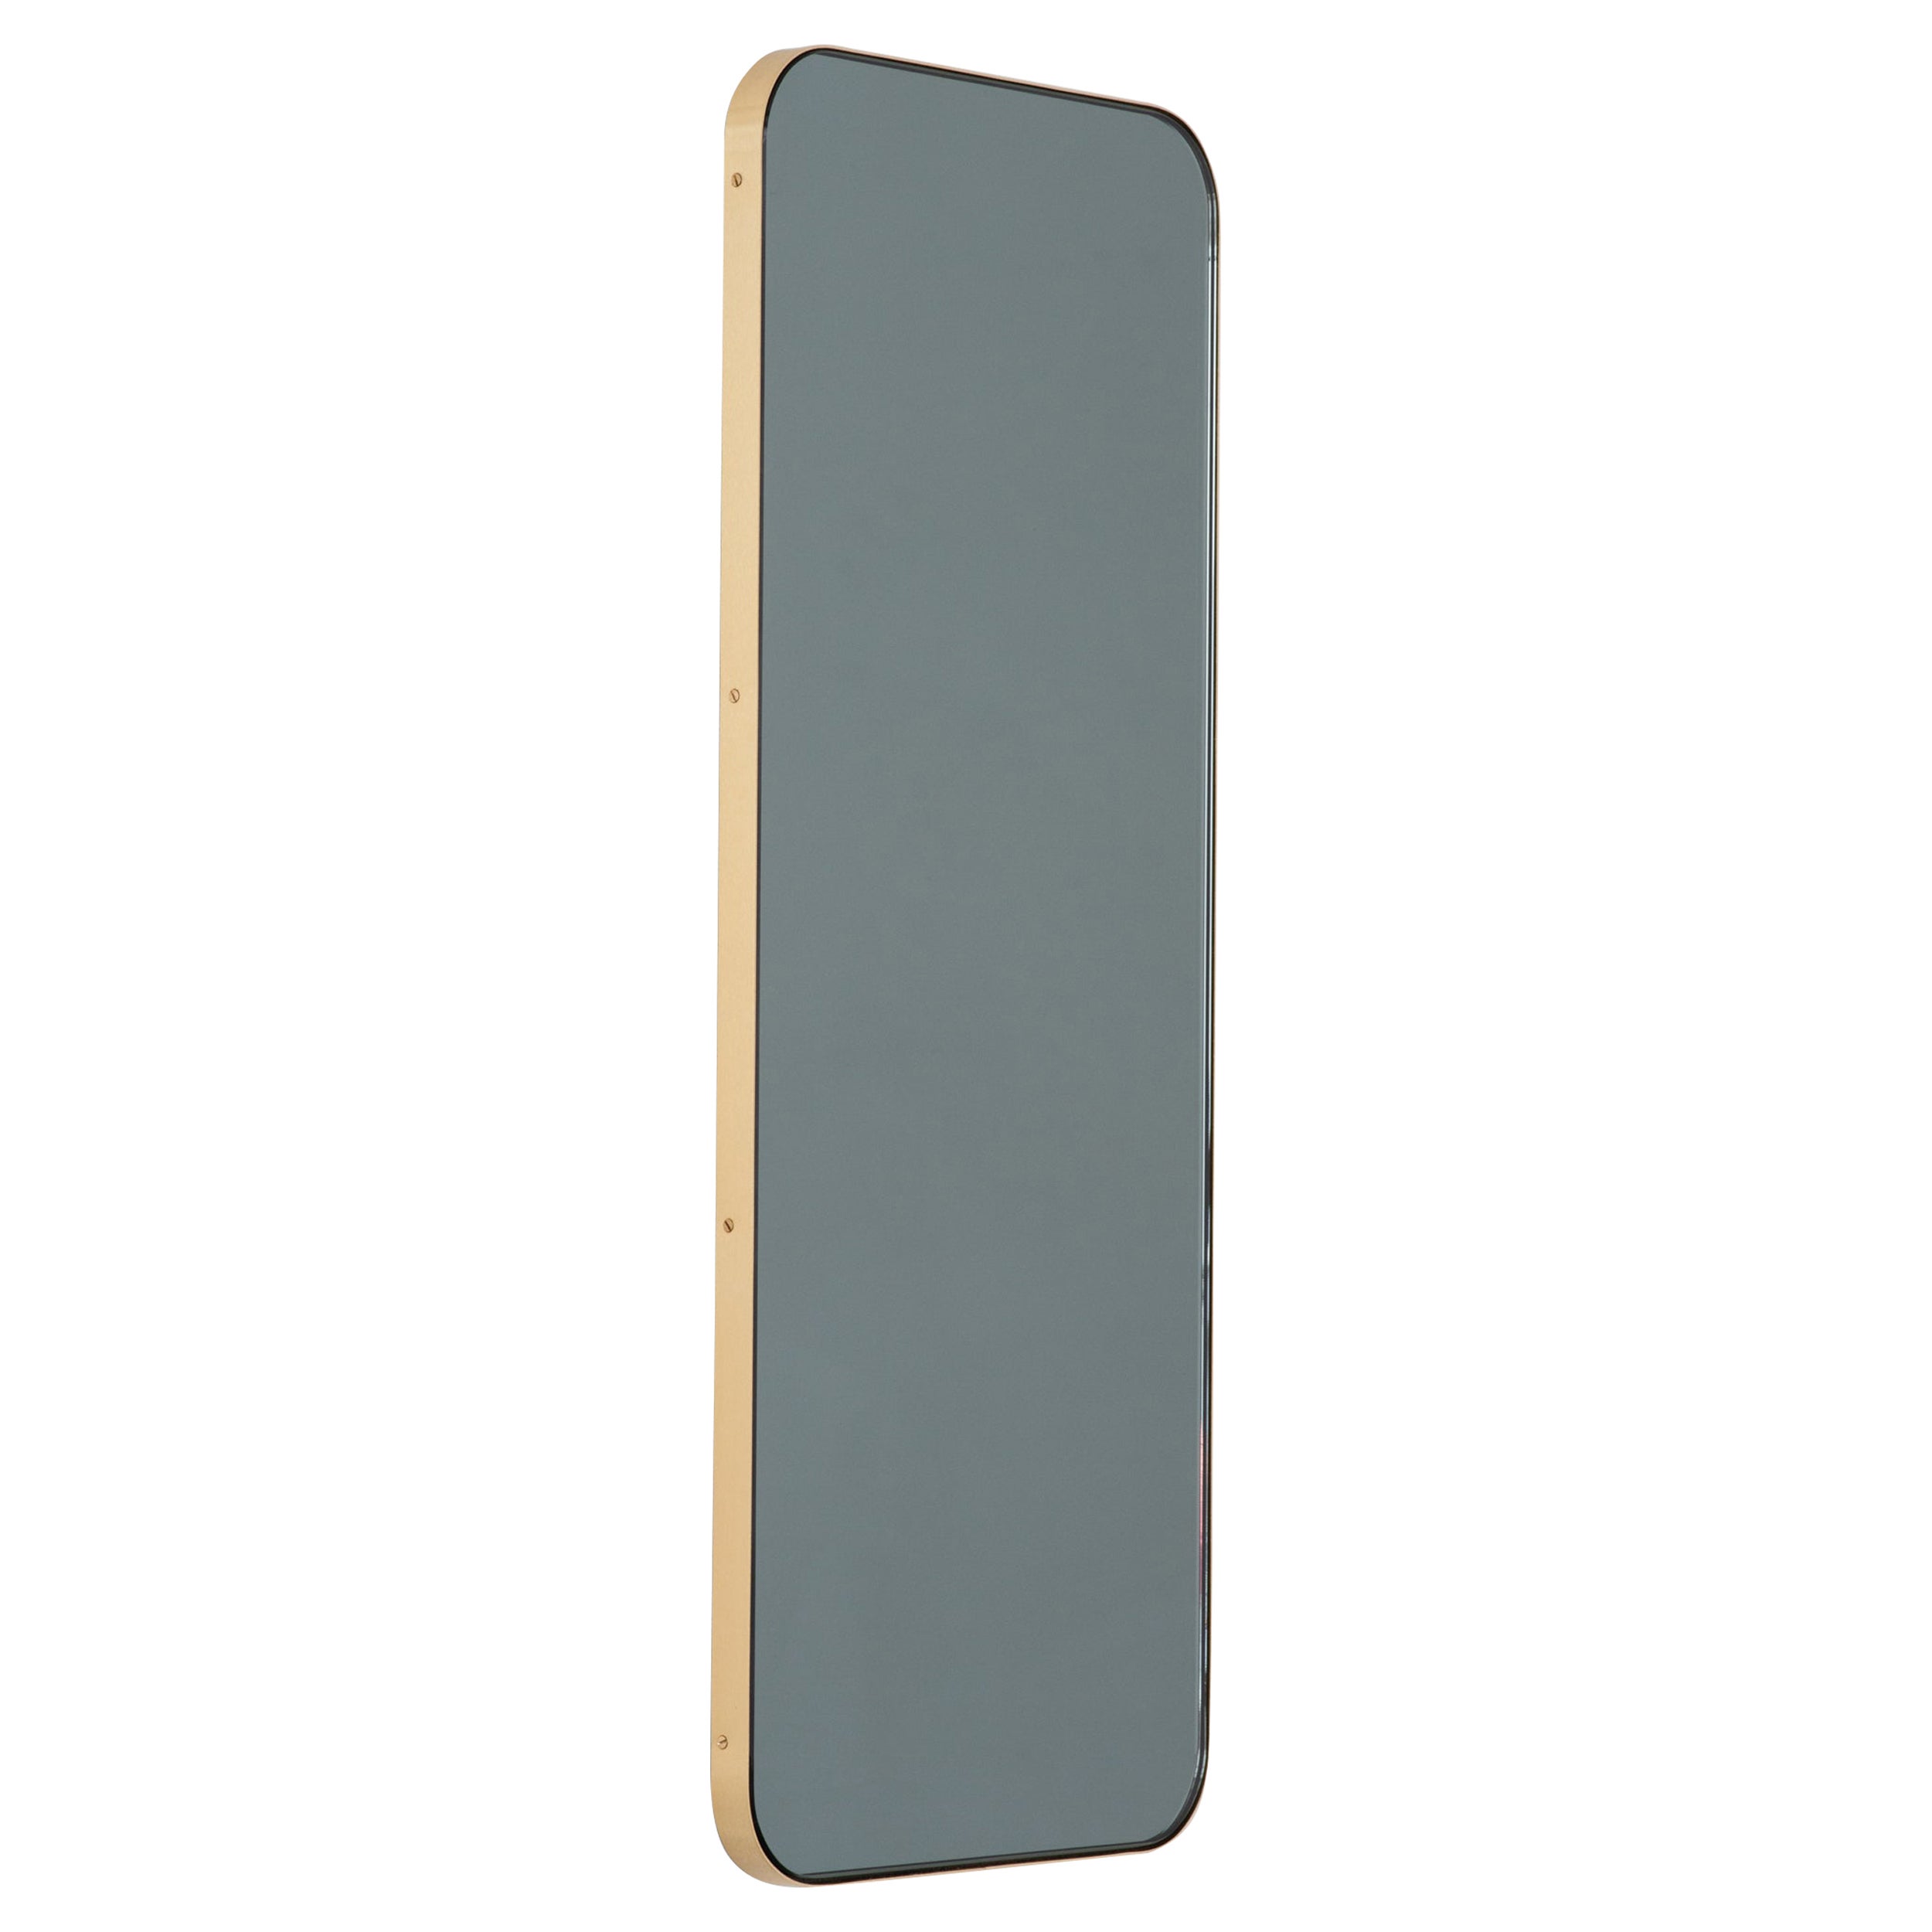 Quadris Black Tinted Rectangular Contemporary Mirror with a Brass Frame, Medium For Sale